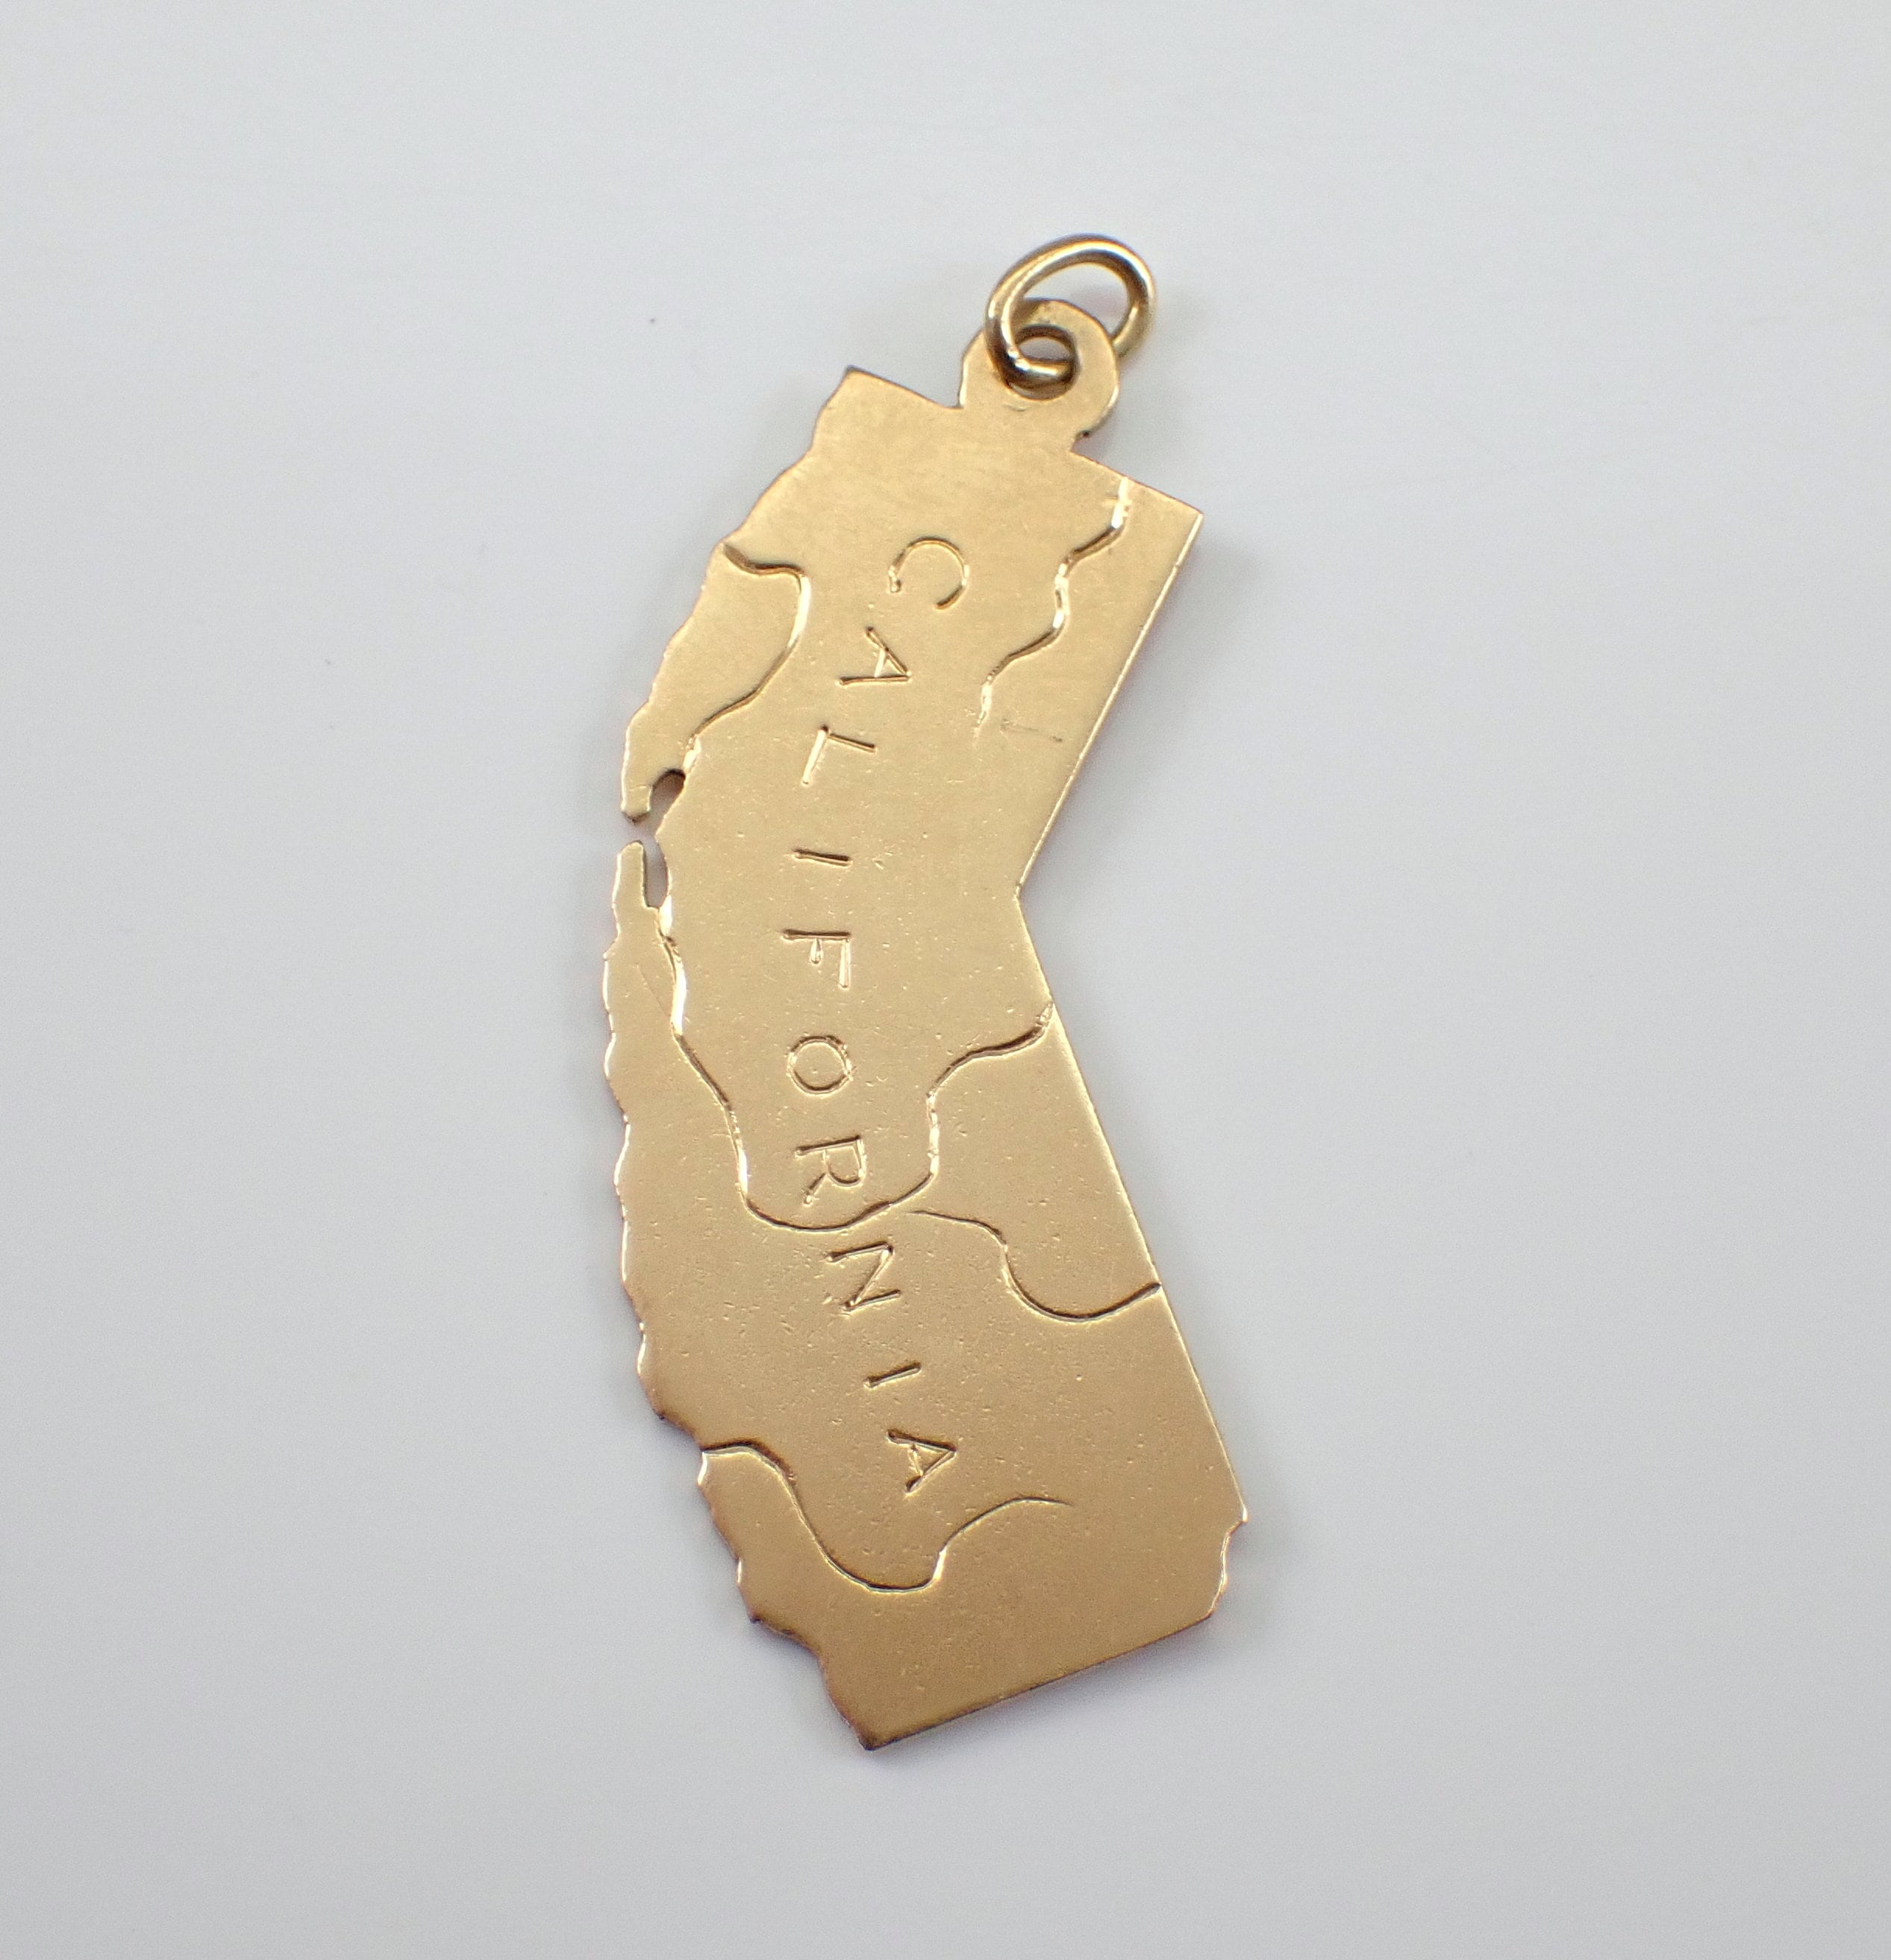 Cute Gold Necklace - California Necklace - $10.00 - Lulus